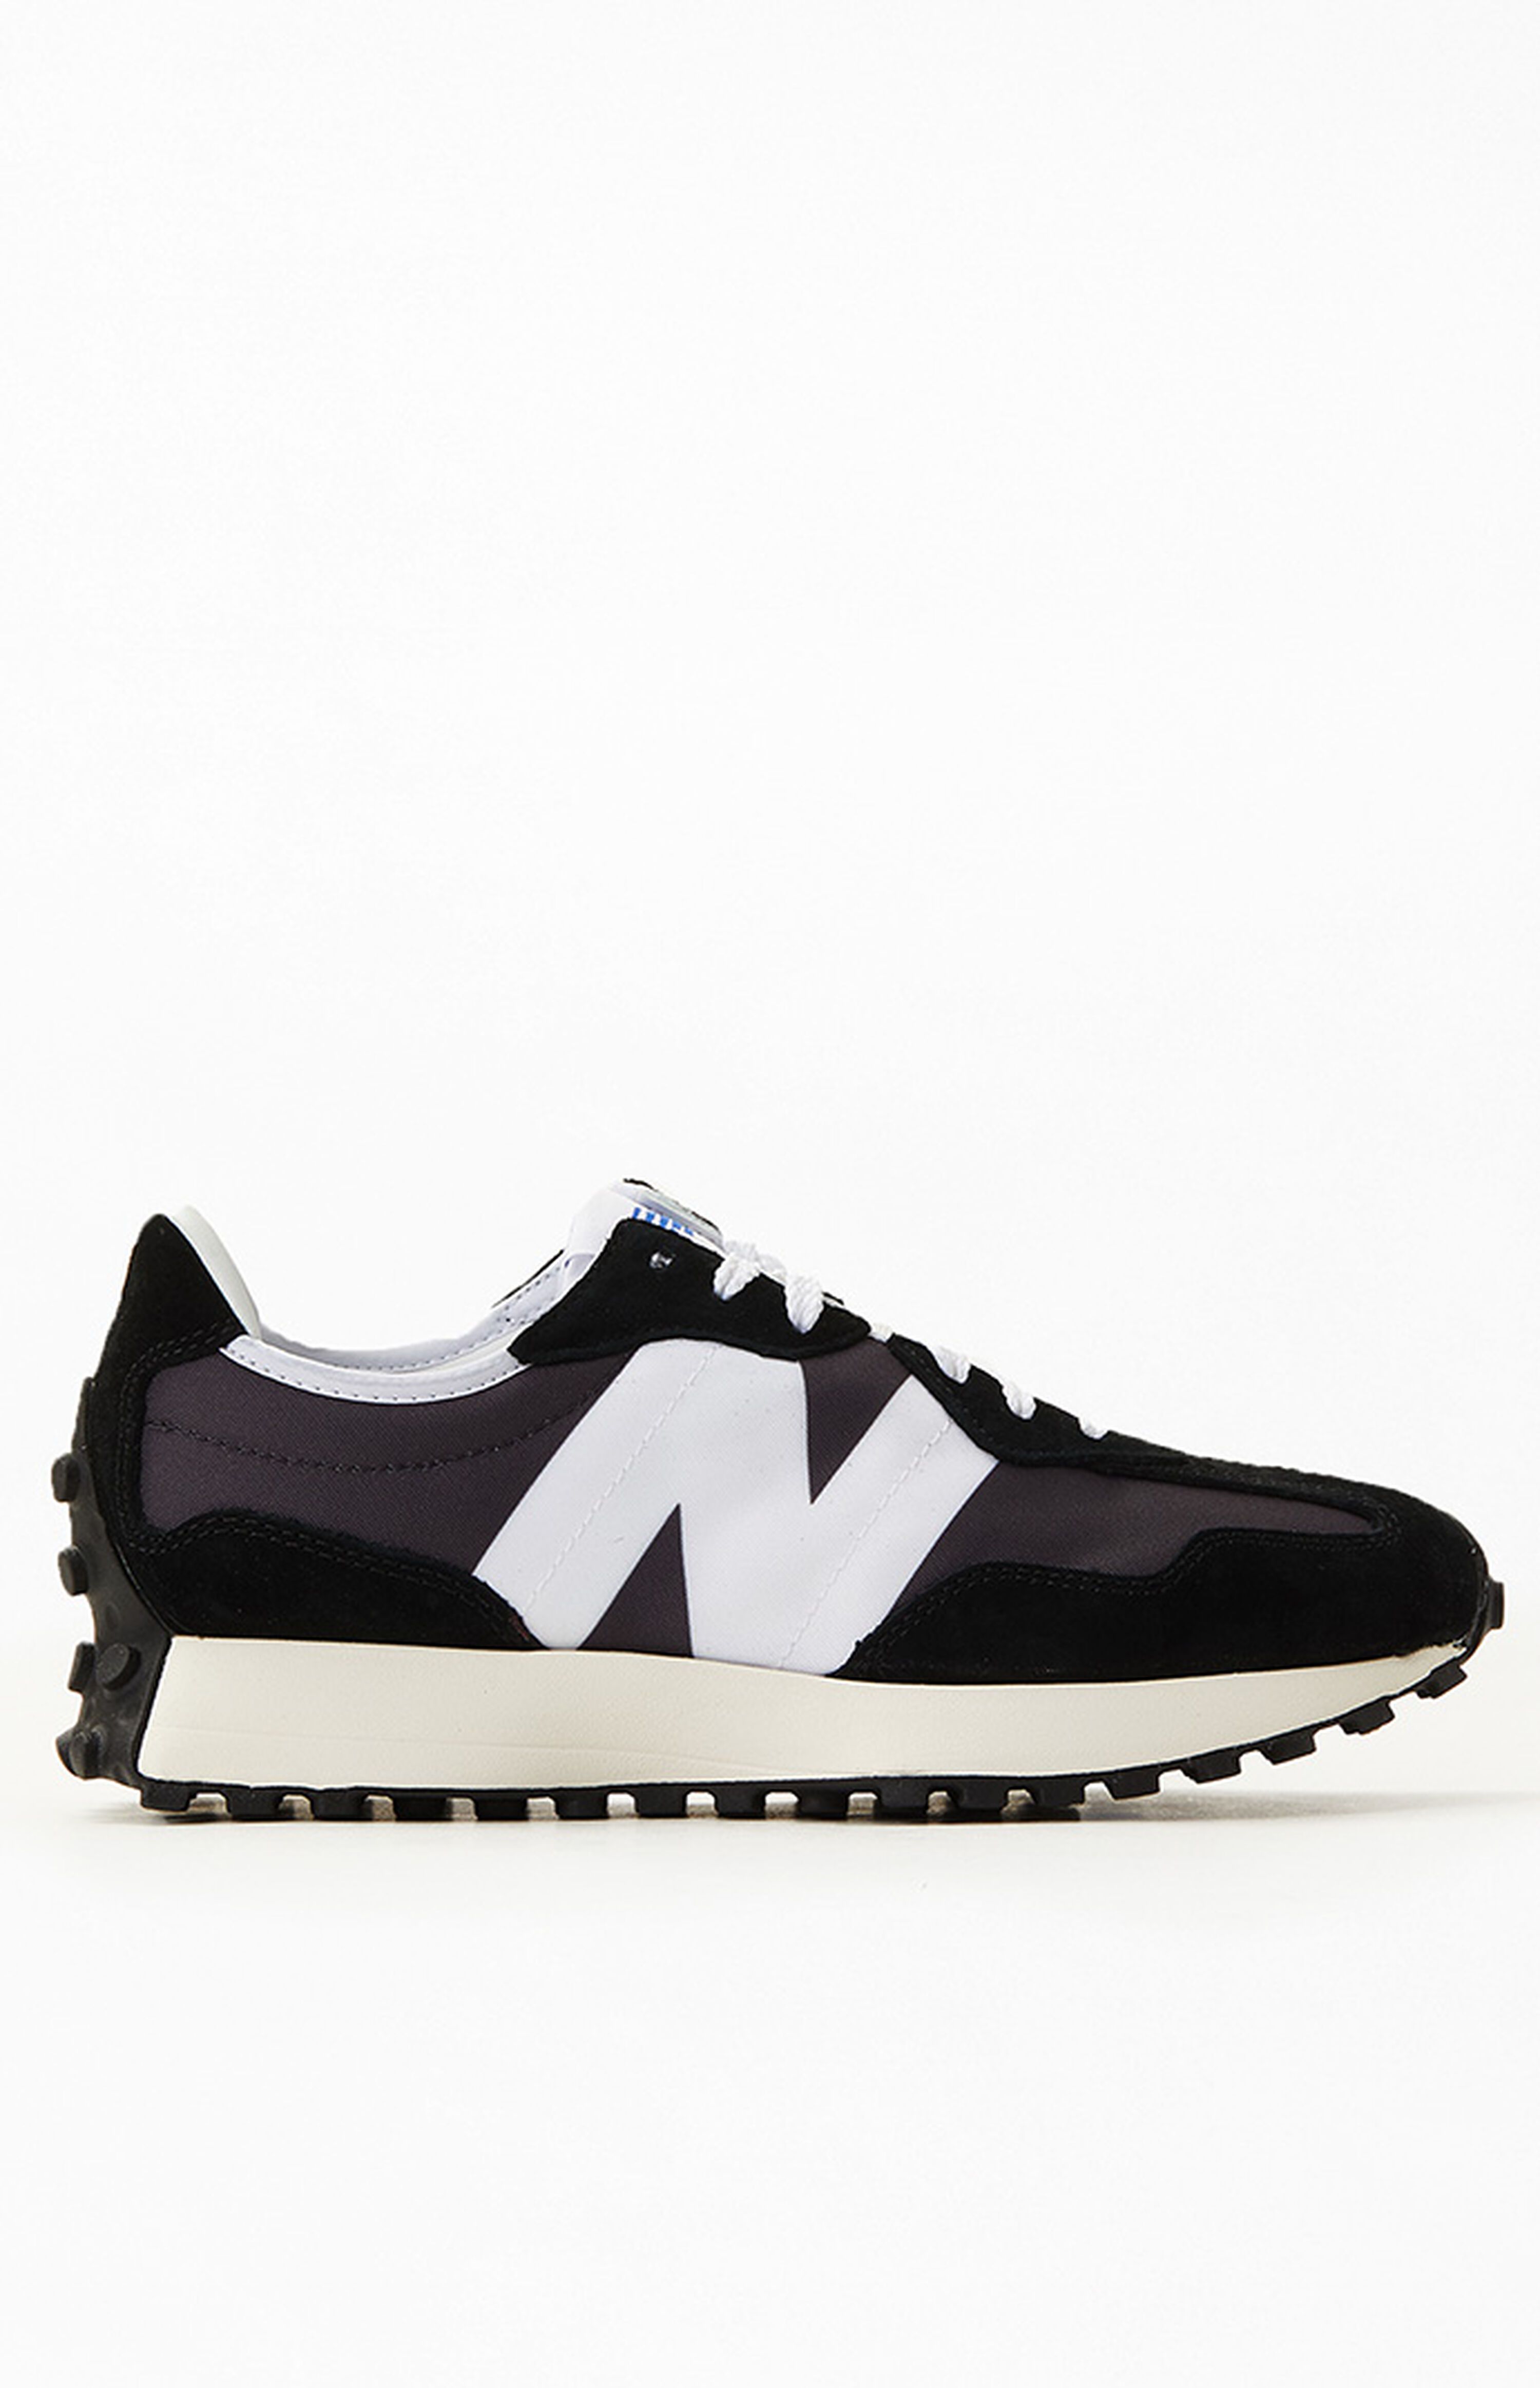 New Balance Black & White 327 Shoes | PacSun